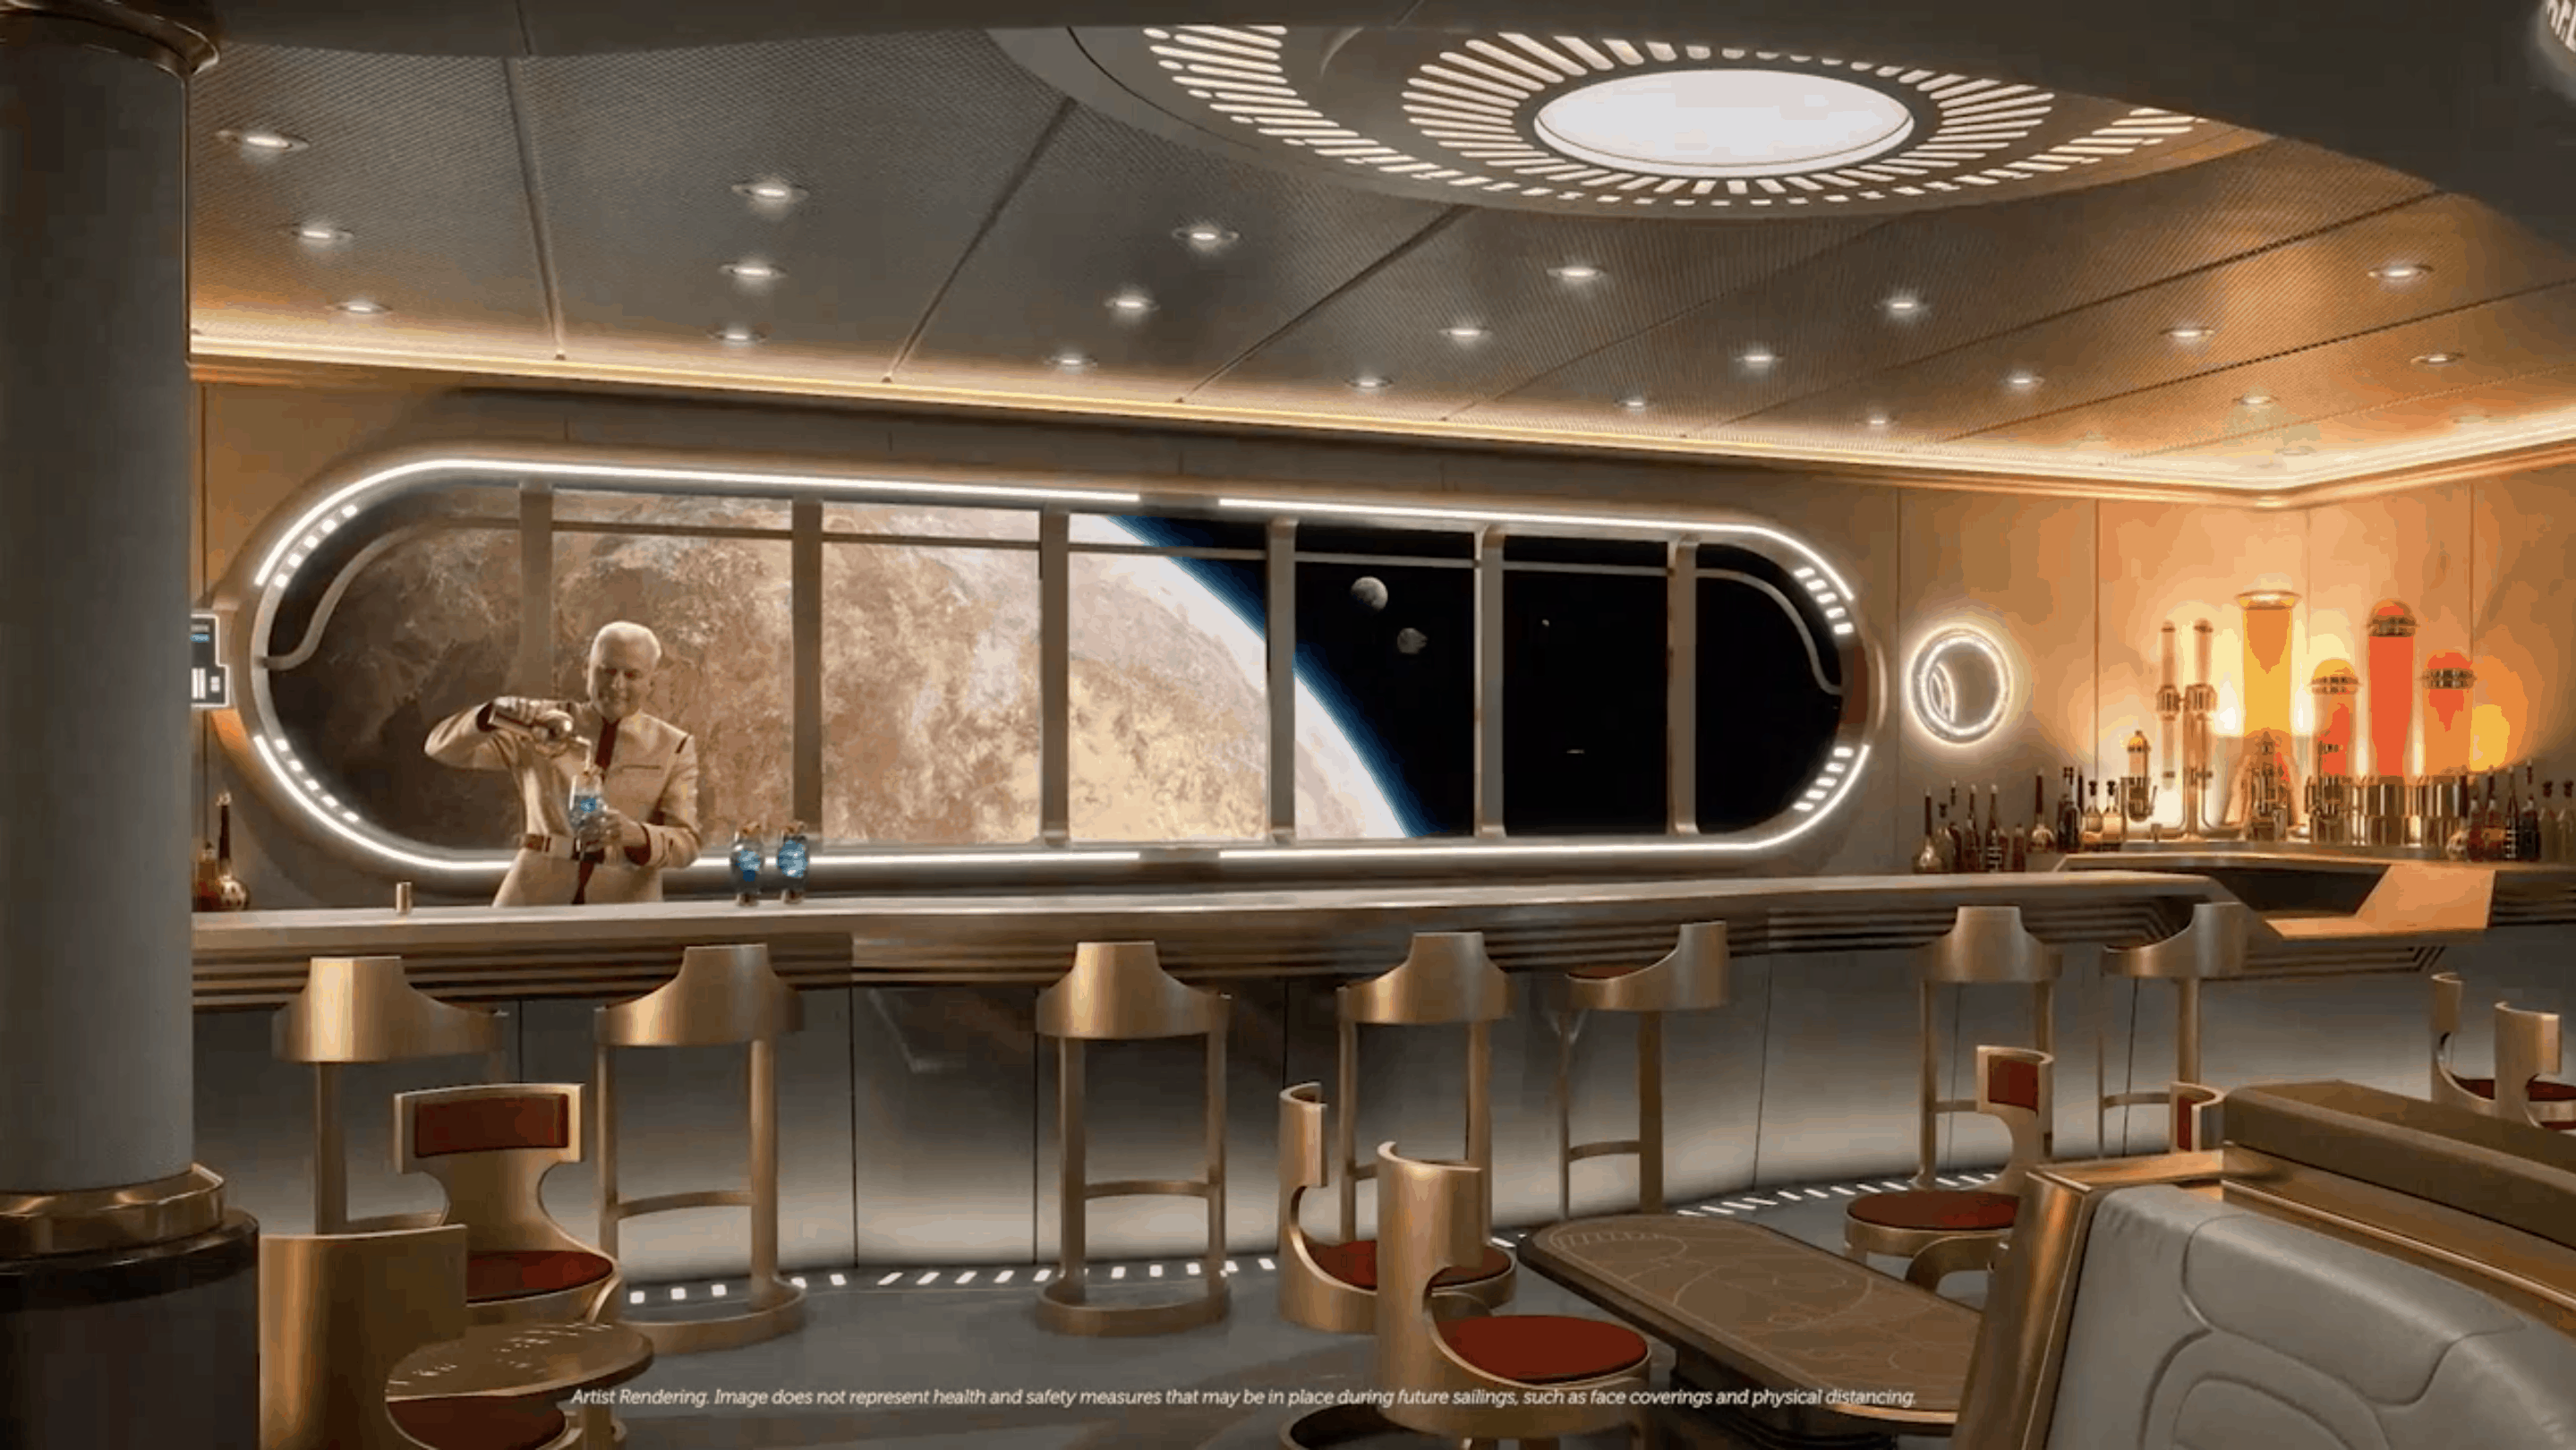 Star-Wars-Hyperspace-Lounge-Disney-Wish-2